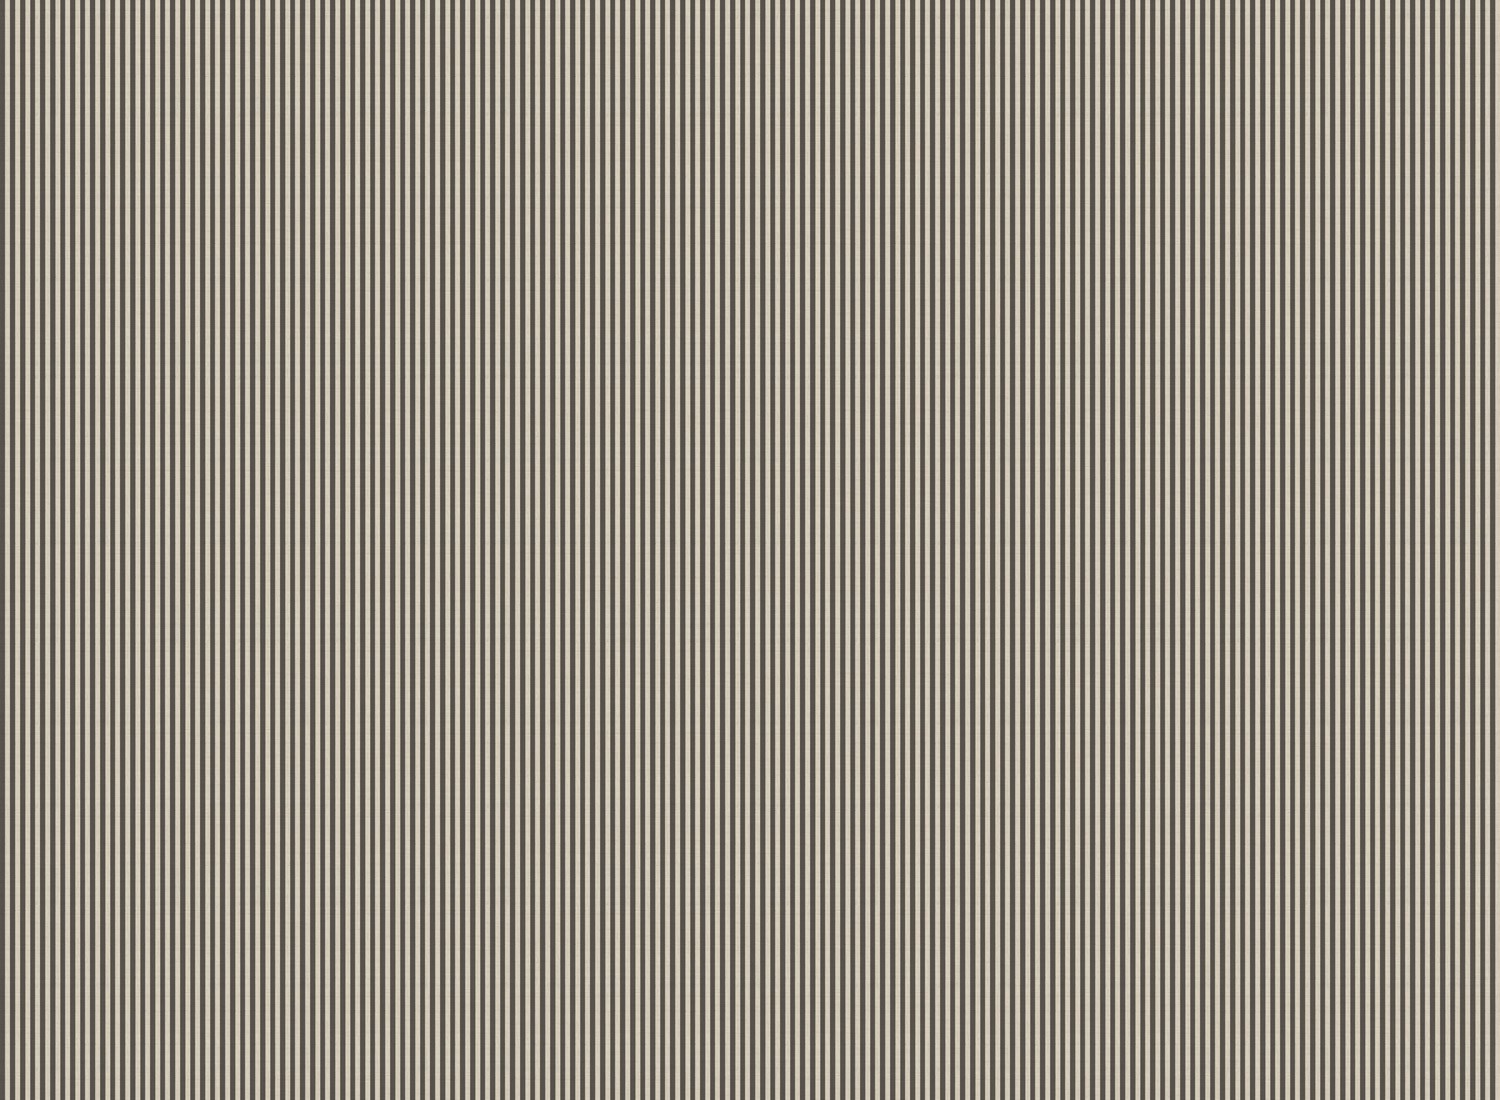 StripedLinen-Charcoal_web